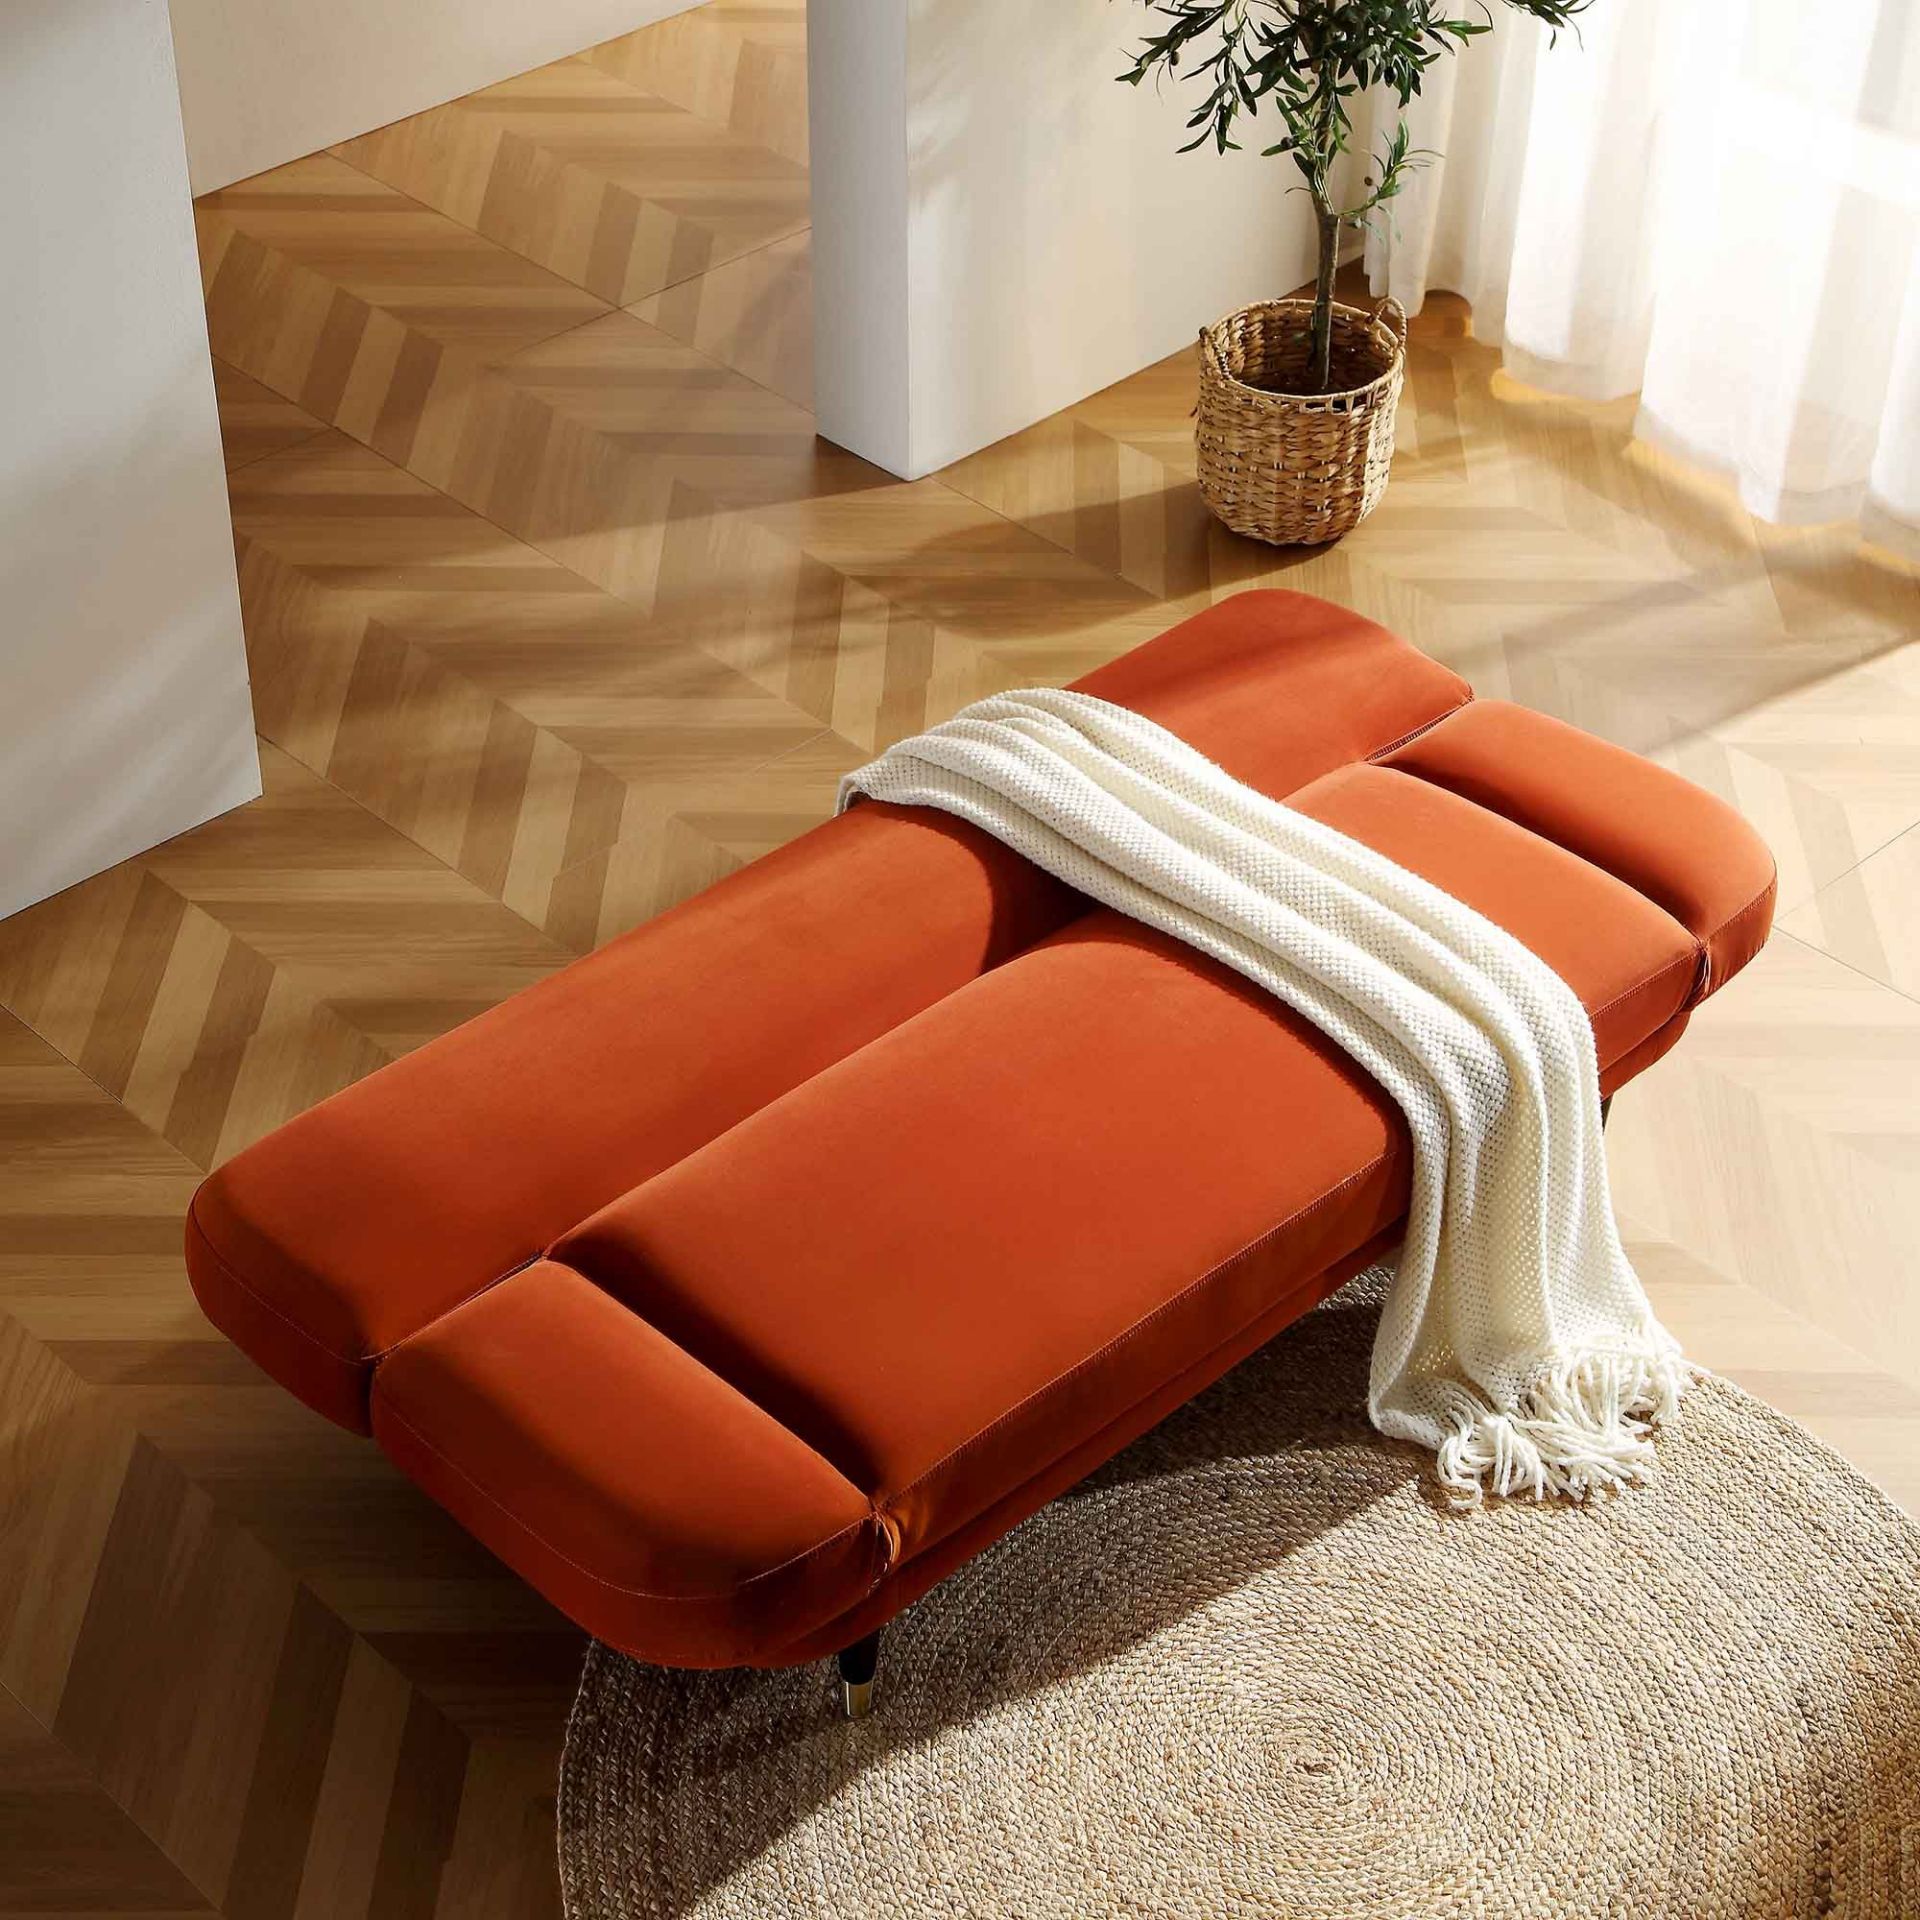 Solna 2-Seater Sofa Bed, Rust Velvet. -ER23. RRP £439.99. Upholstered in soft champagne colour - Image 2 of 2